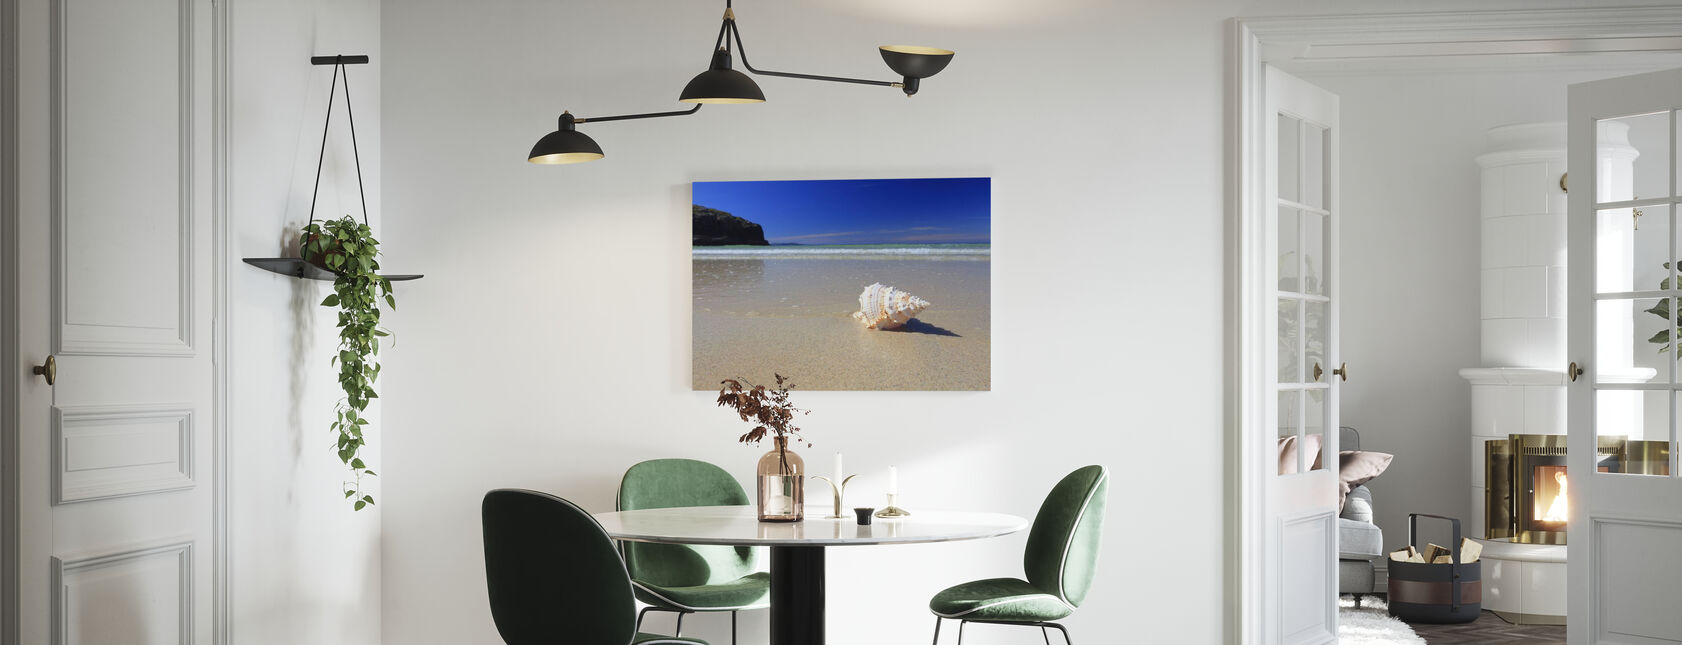 Shell on Beach - Canvas print - Kitchen